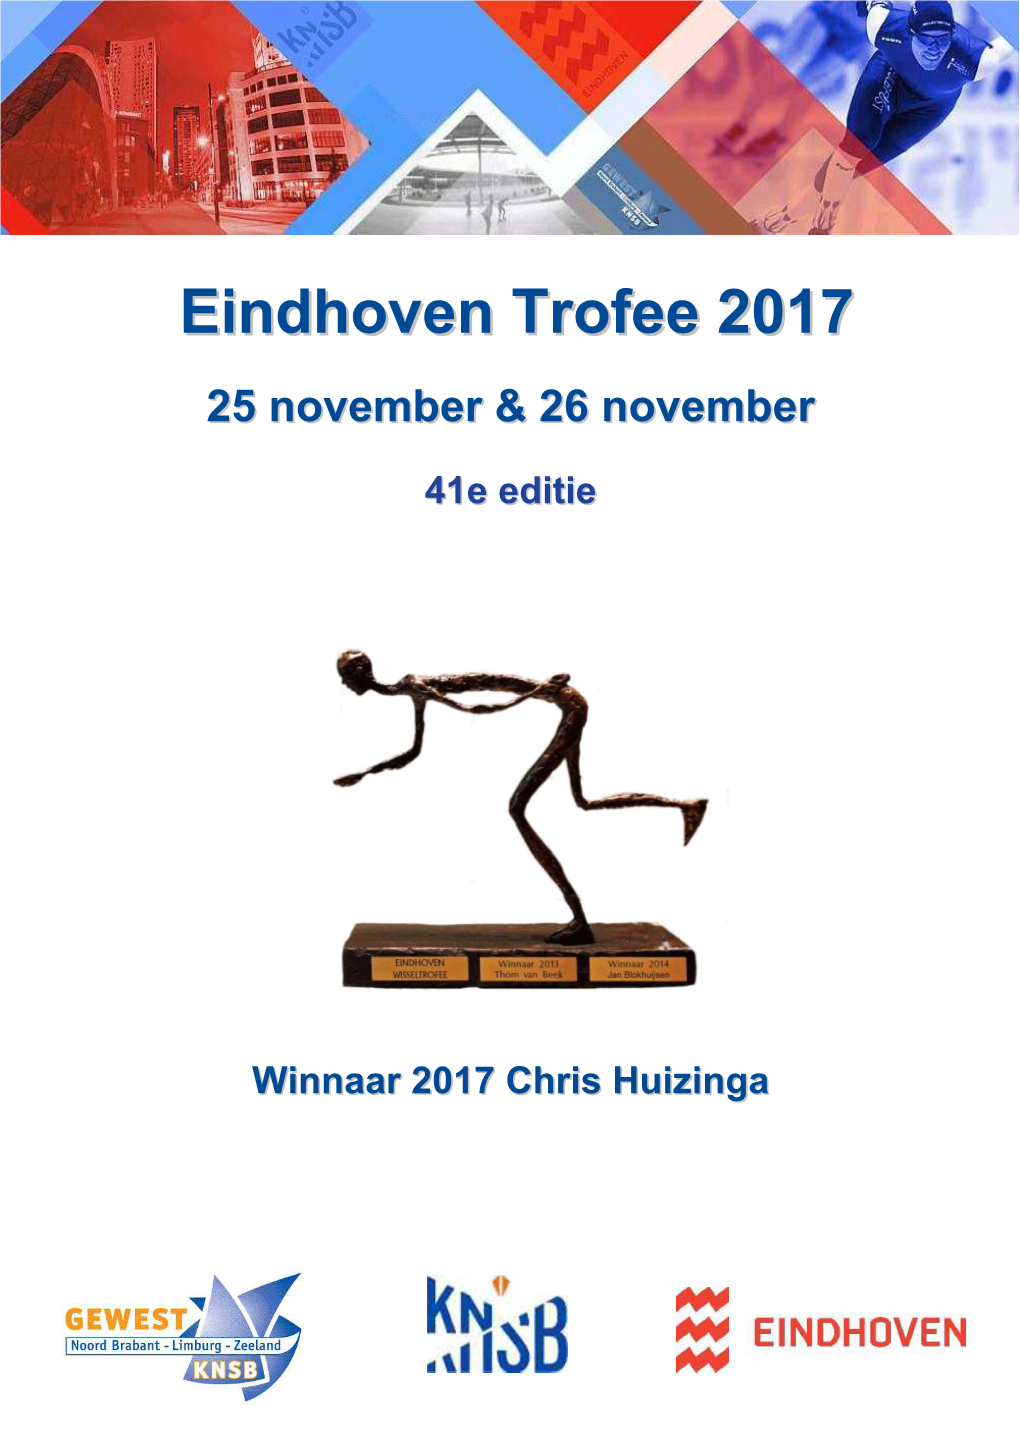 Eindhoven Trofee 2017